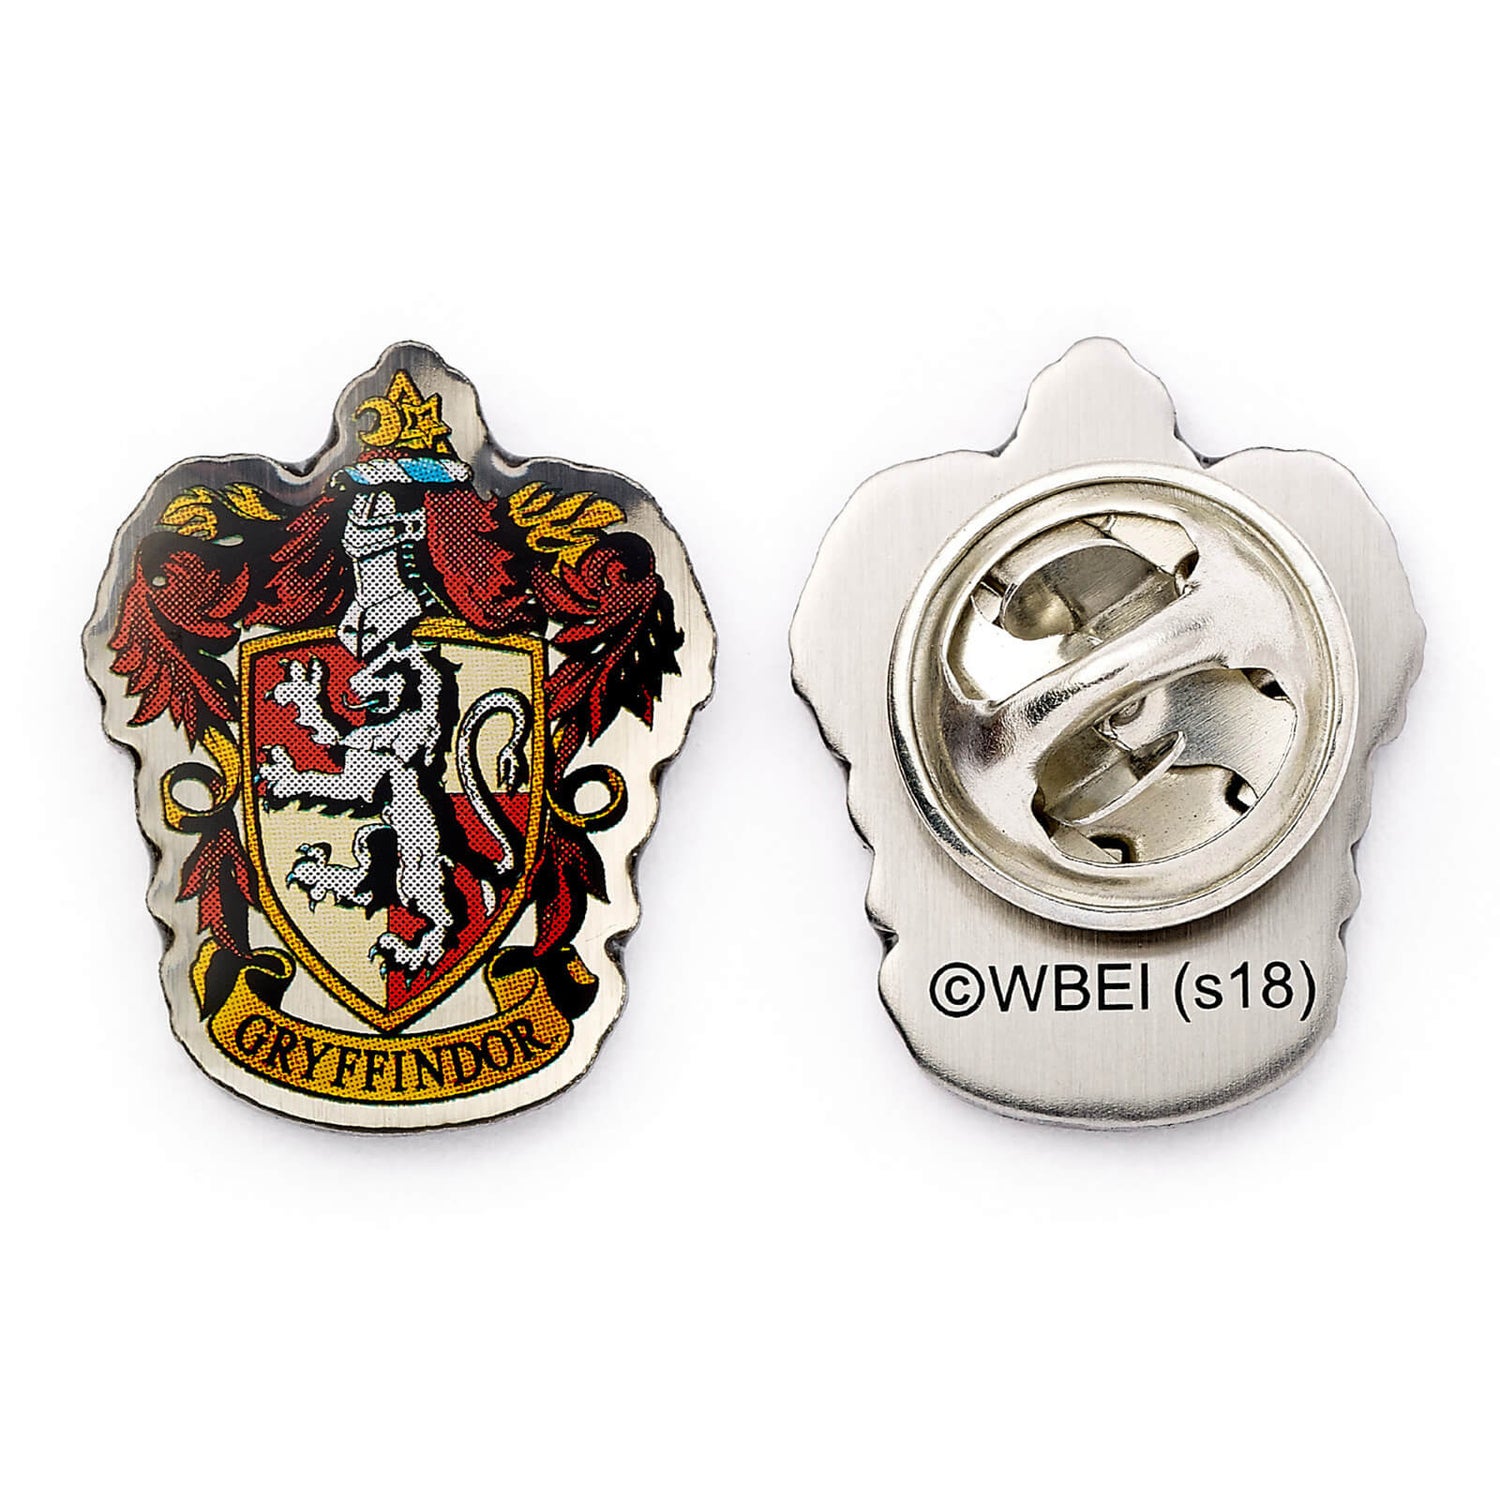 Harry Potter Gryffindor Crest Pin Badge - Silver